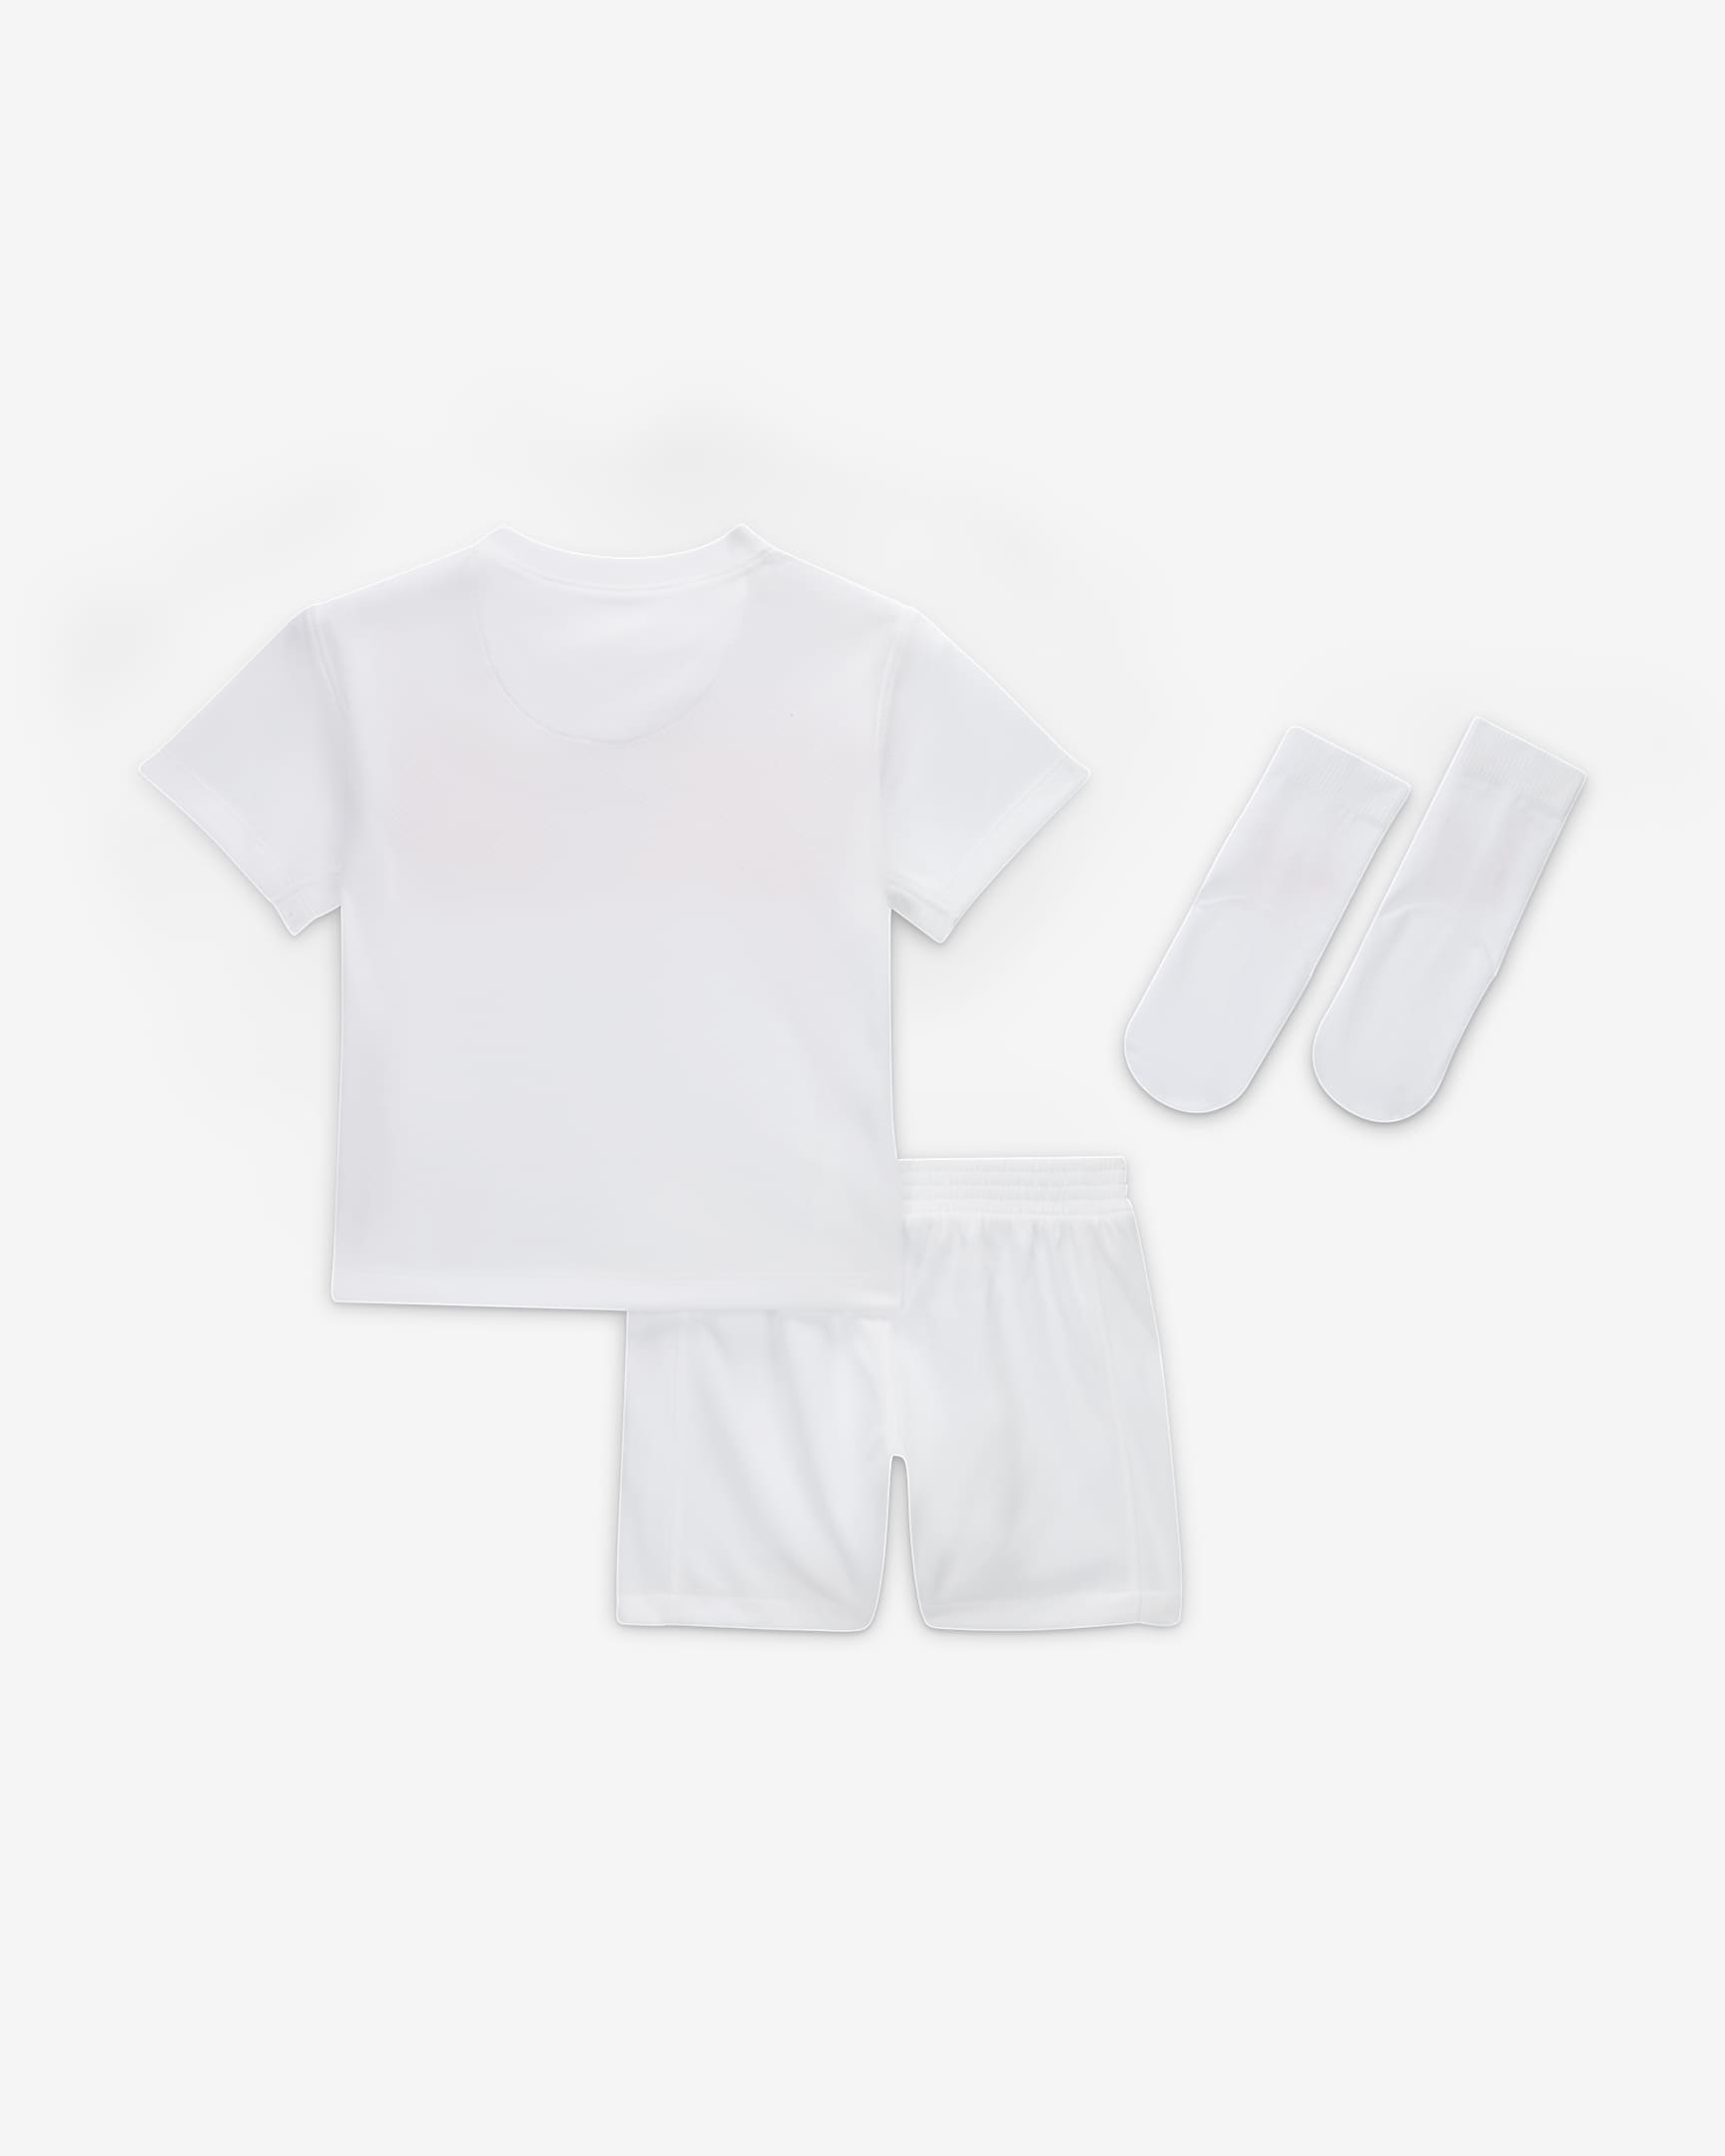 Croatia 2024/25 Stadium Home Baby/Toddler Nike Football Replica Kit - White/University Red/White